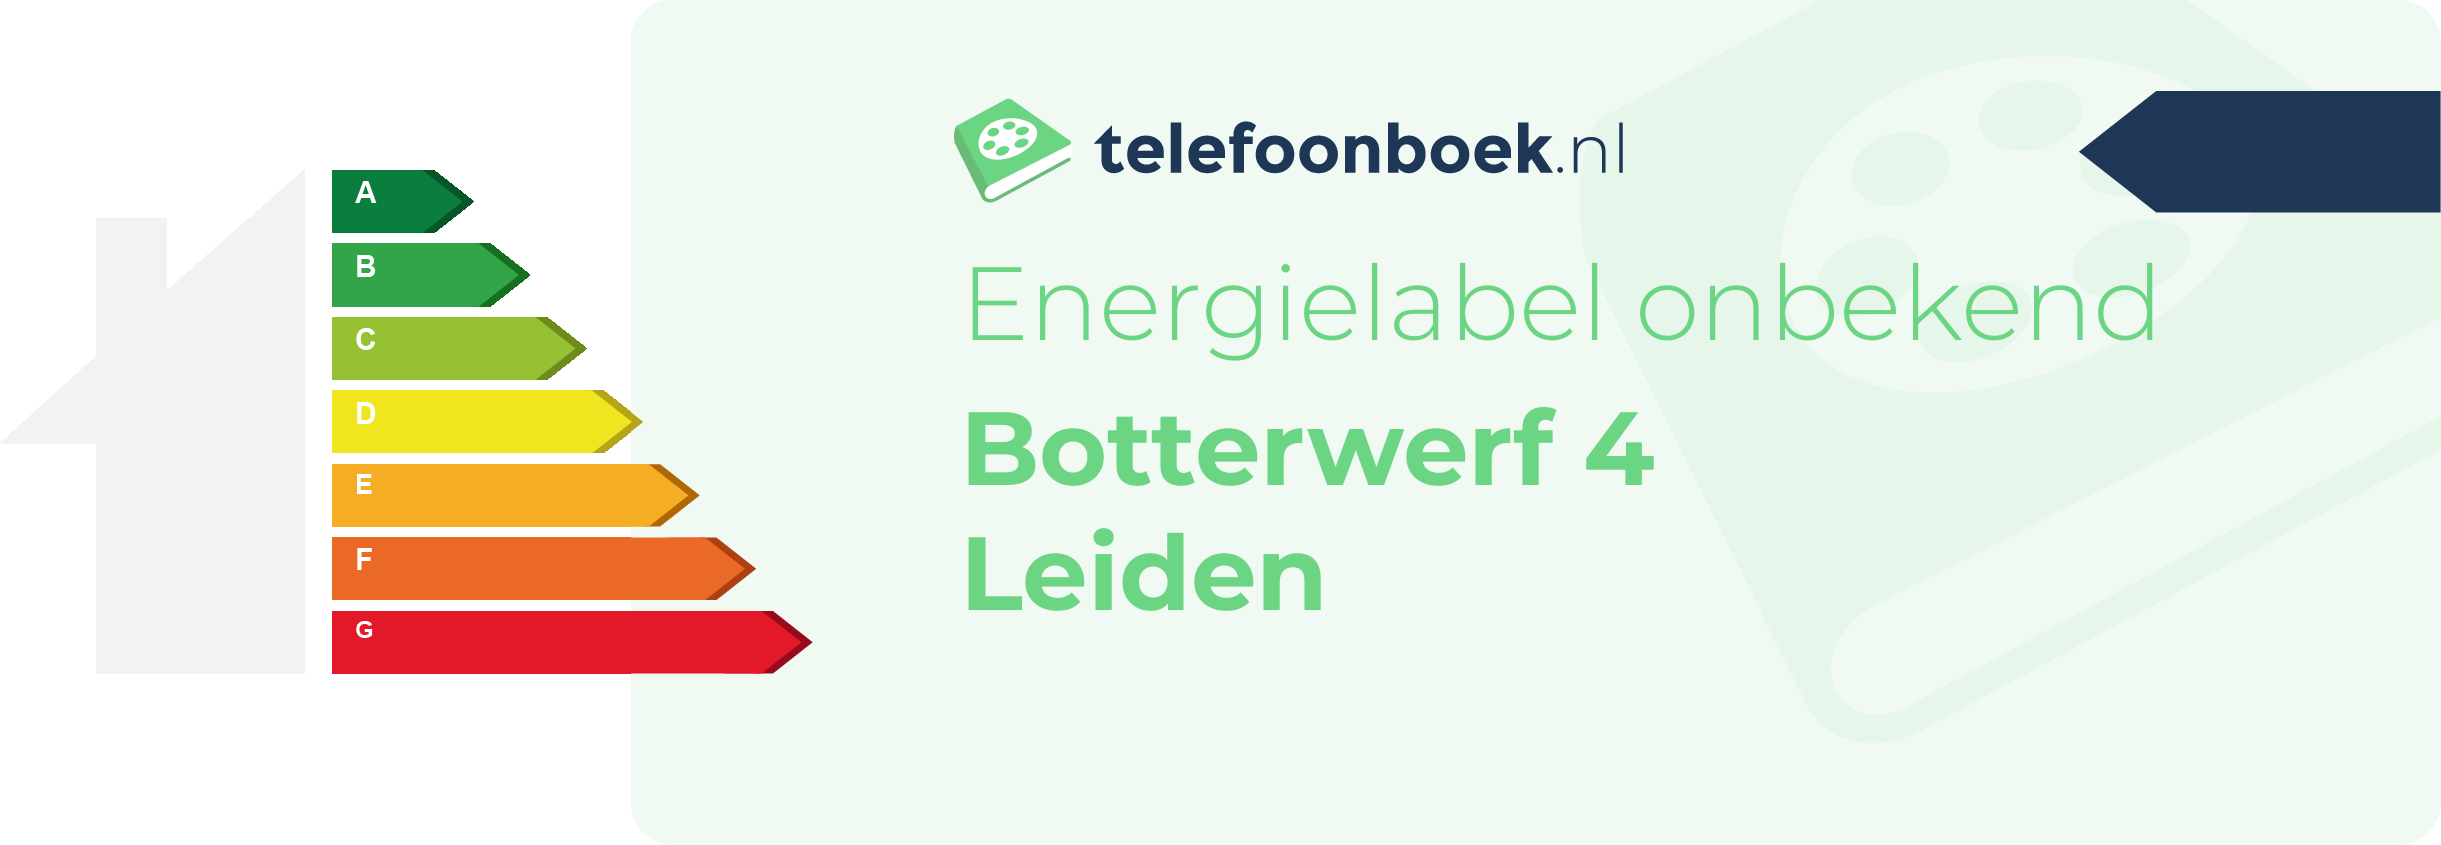 Energielabel Botterwerf 4 Leiden